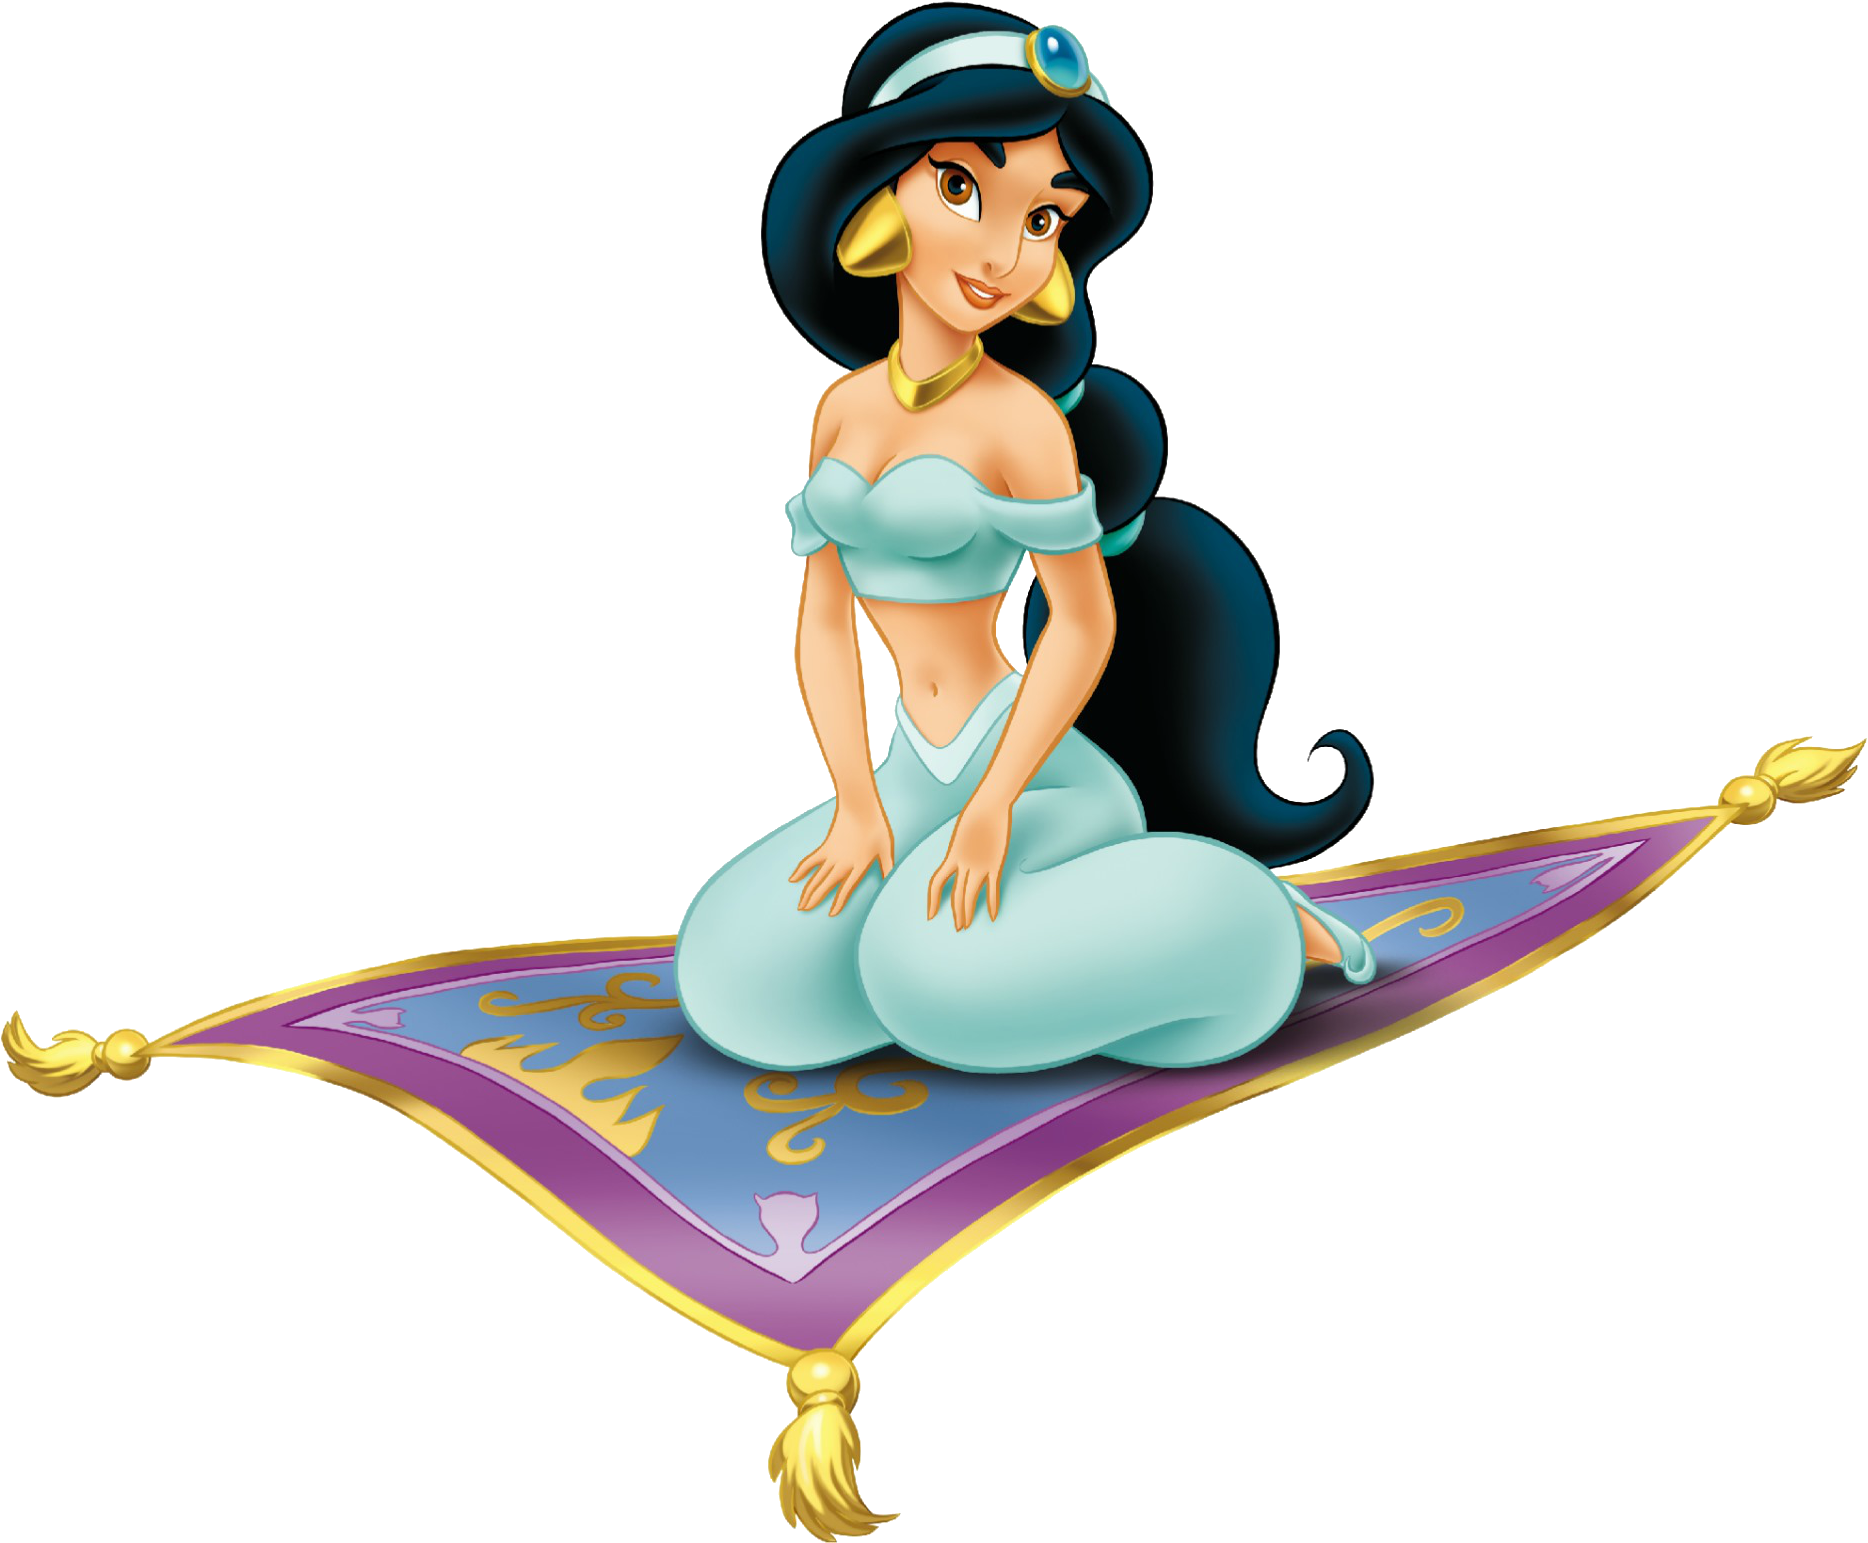 Magic Aladdin Carpet PNG Image High Quality PNG Image